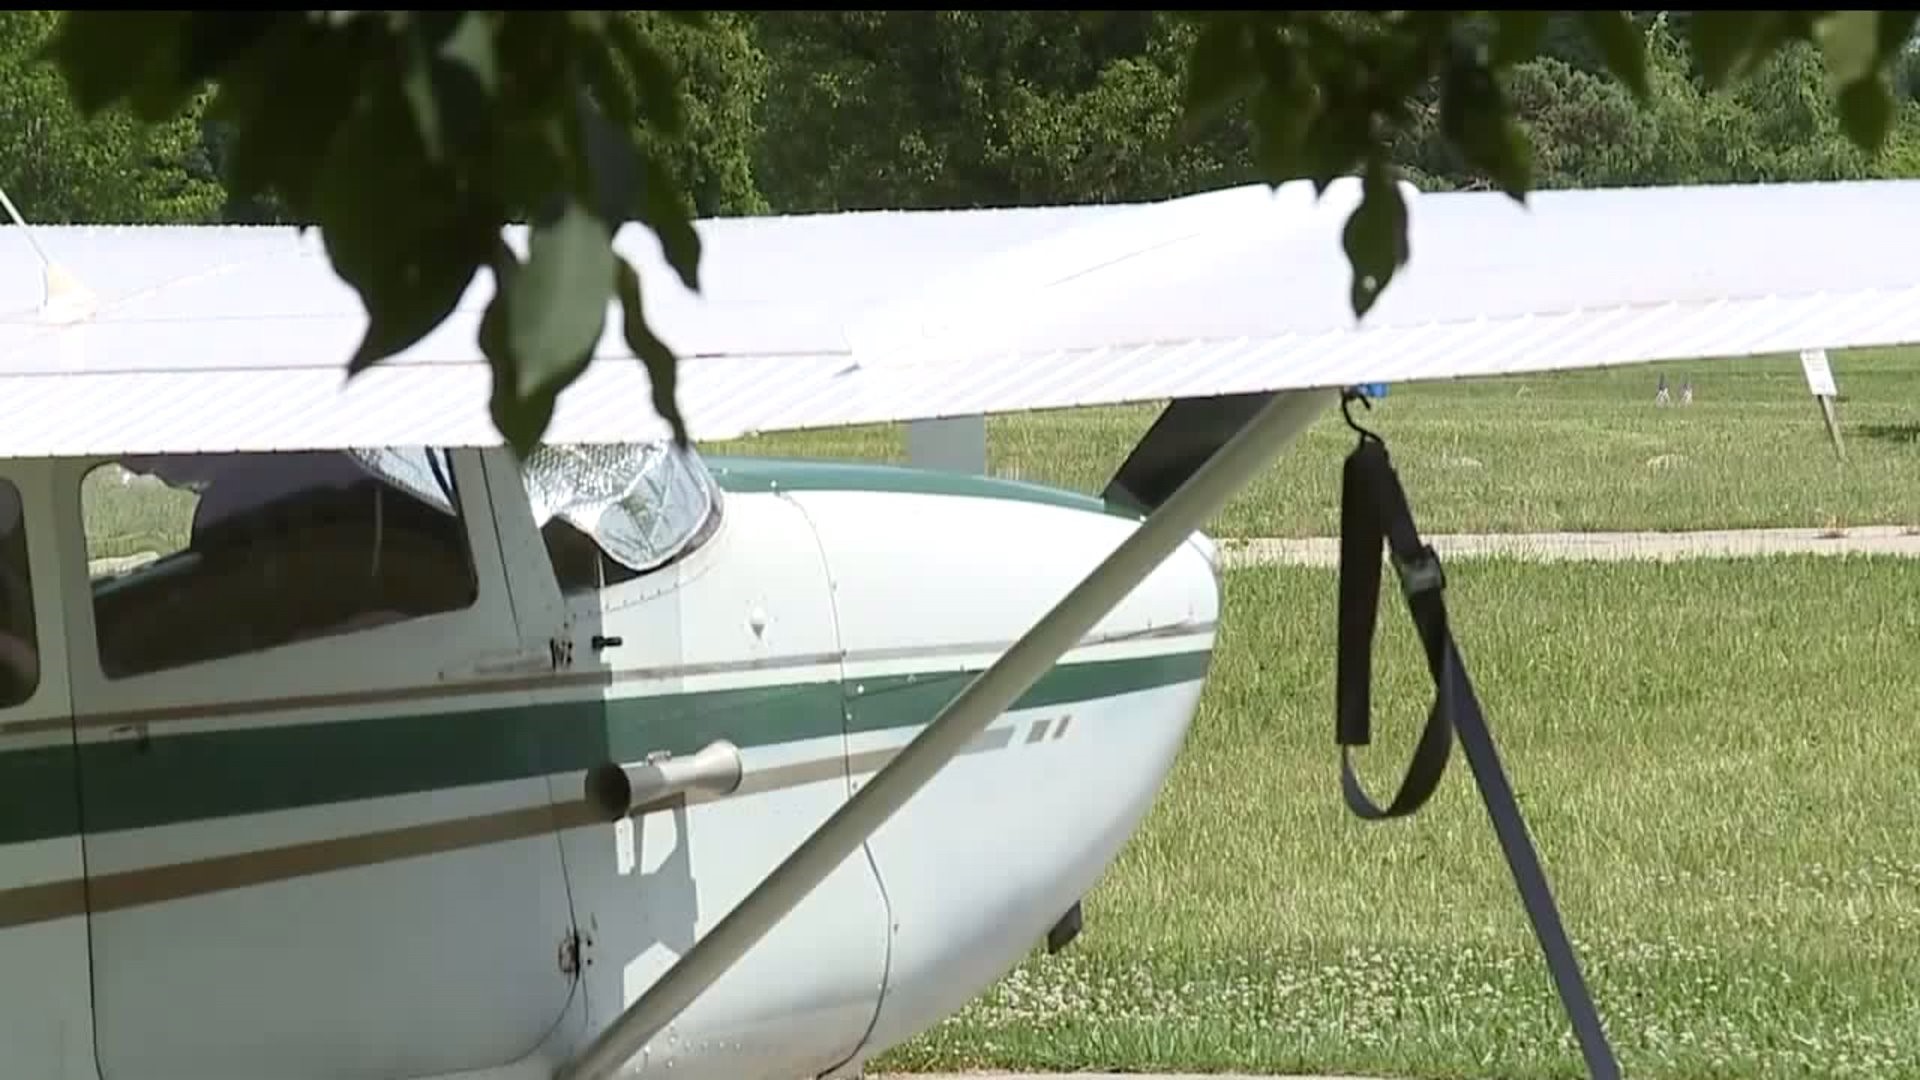 Rough landing: small plane crashes in Conewago Township